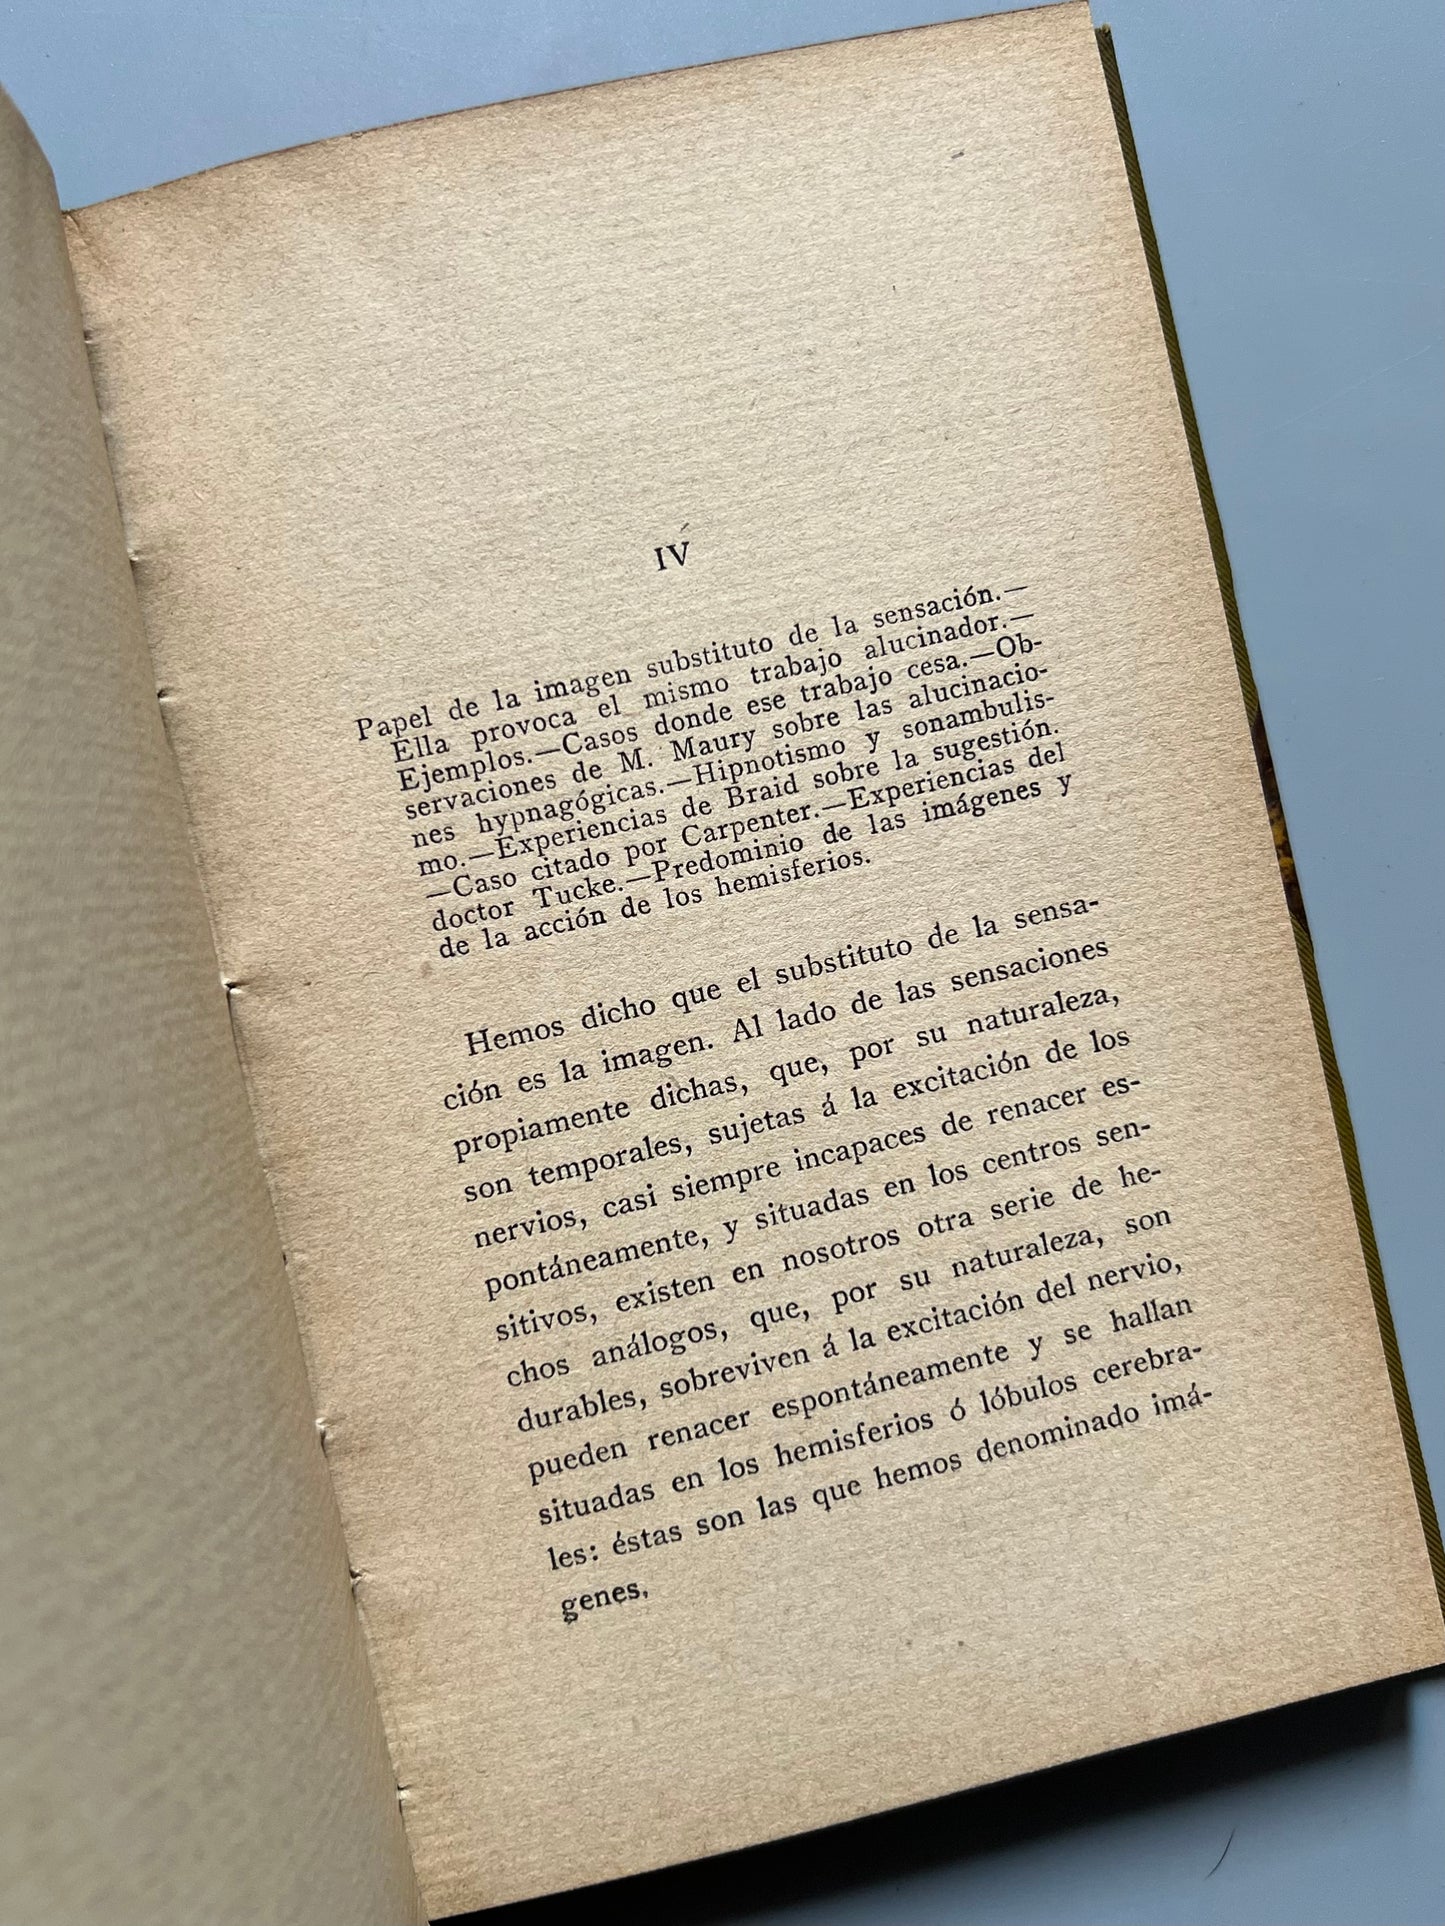 Las ilusiones, Hipolito Taine - Centro Editorial Presa, ca. 1920